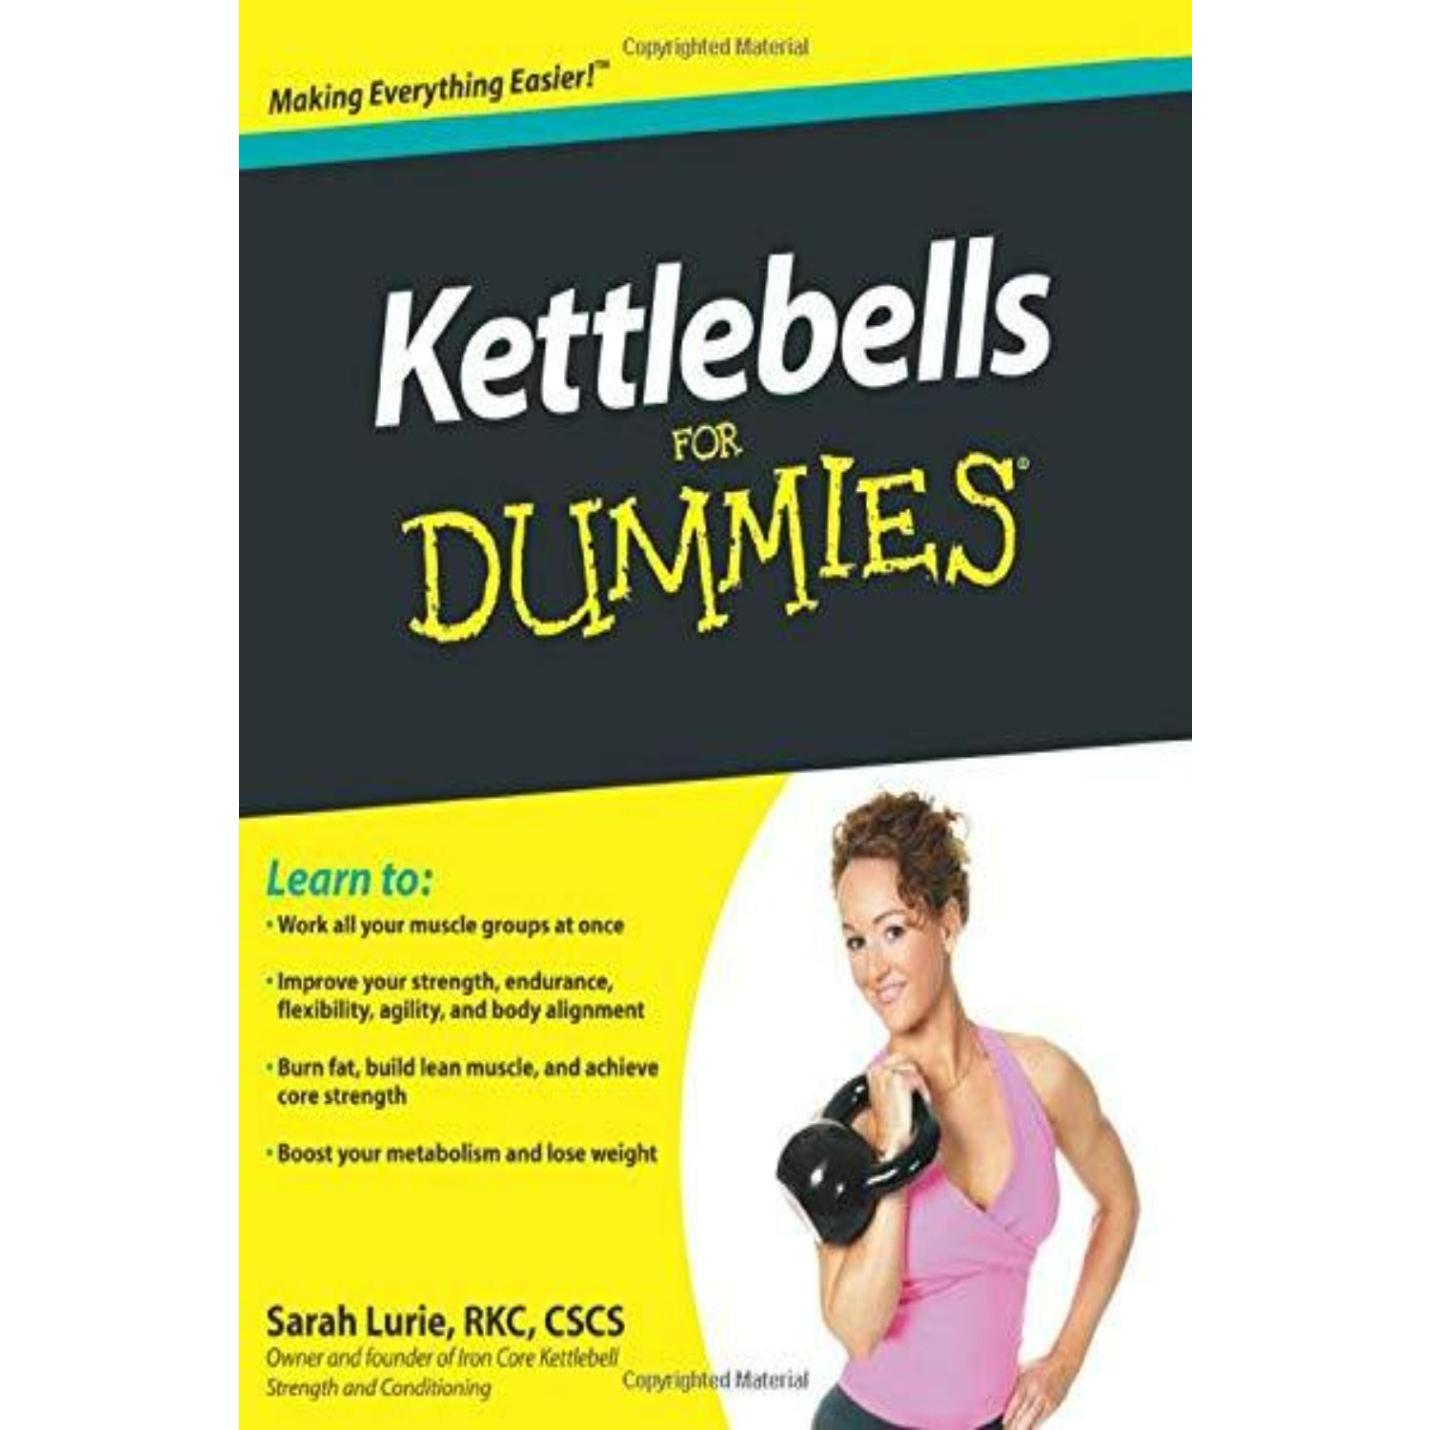 Kettlebells For Dummies - happygetfit.com